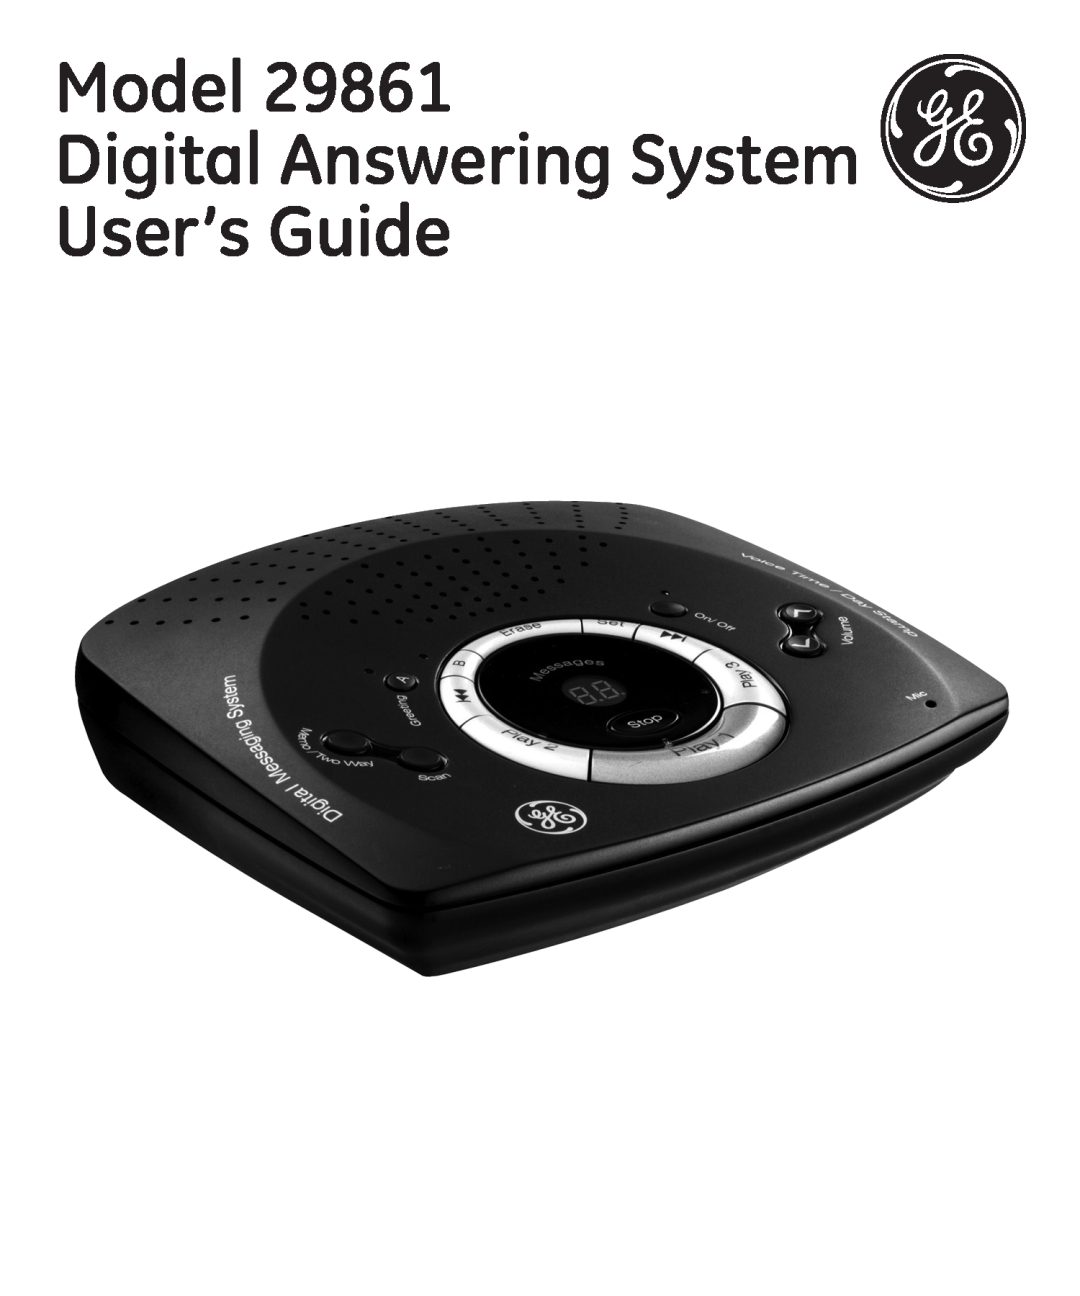 GE 29861 manual Model Digital Answering System User’s Guide 